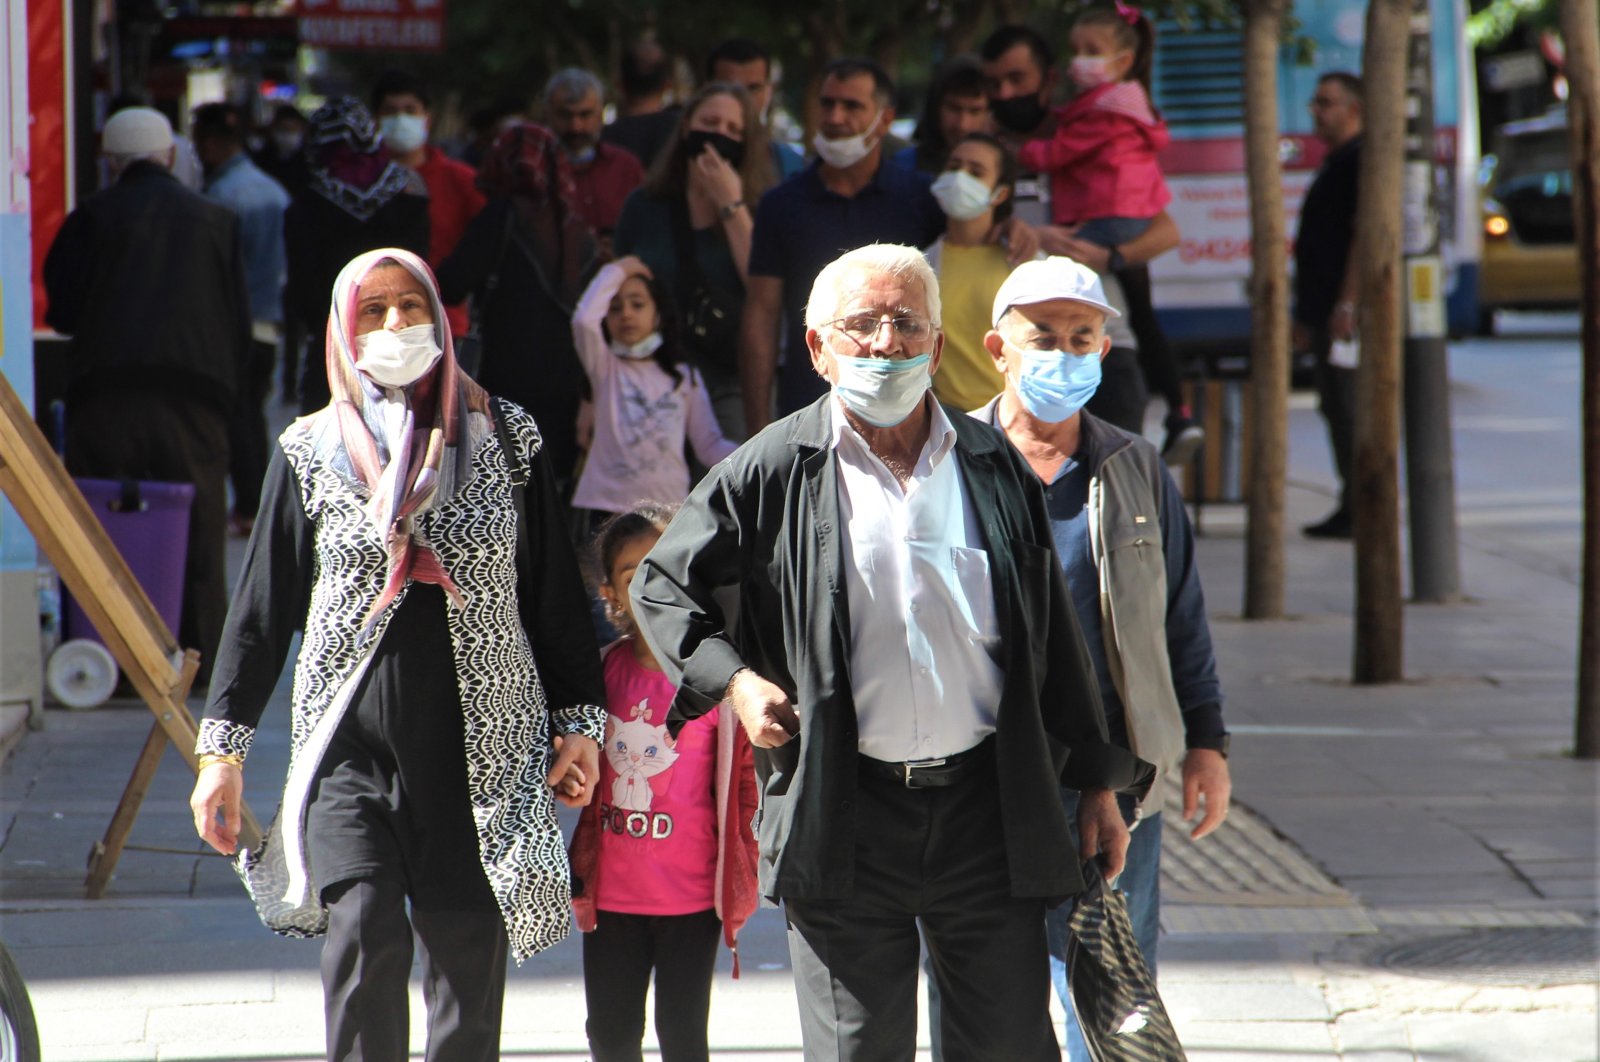 People wearing protective masks against COVID-19 walk on a street in Elazığ, eastern Turkey, Sept. 26, 2021. (İHA PHOTO) 